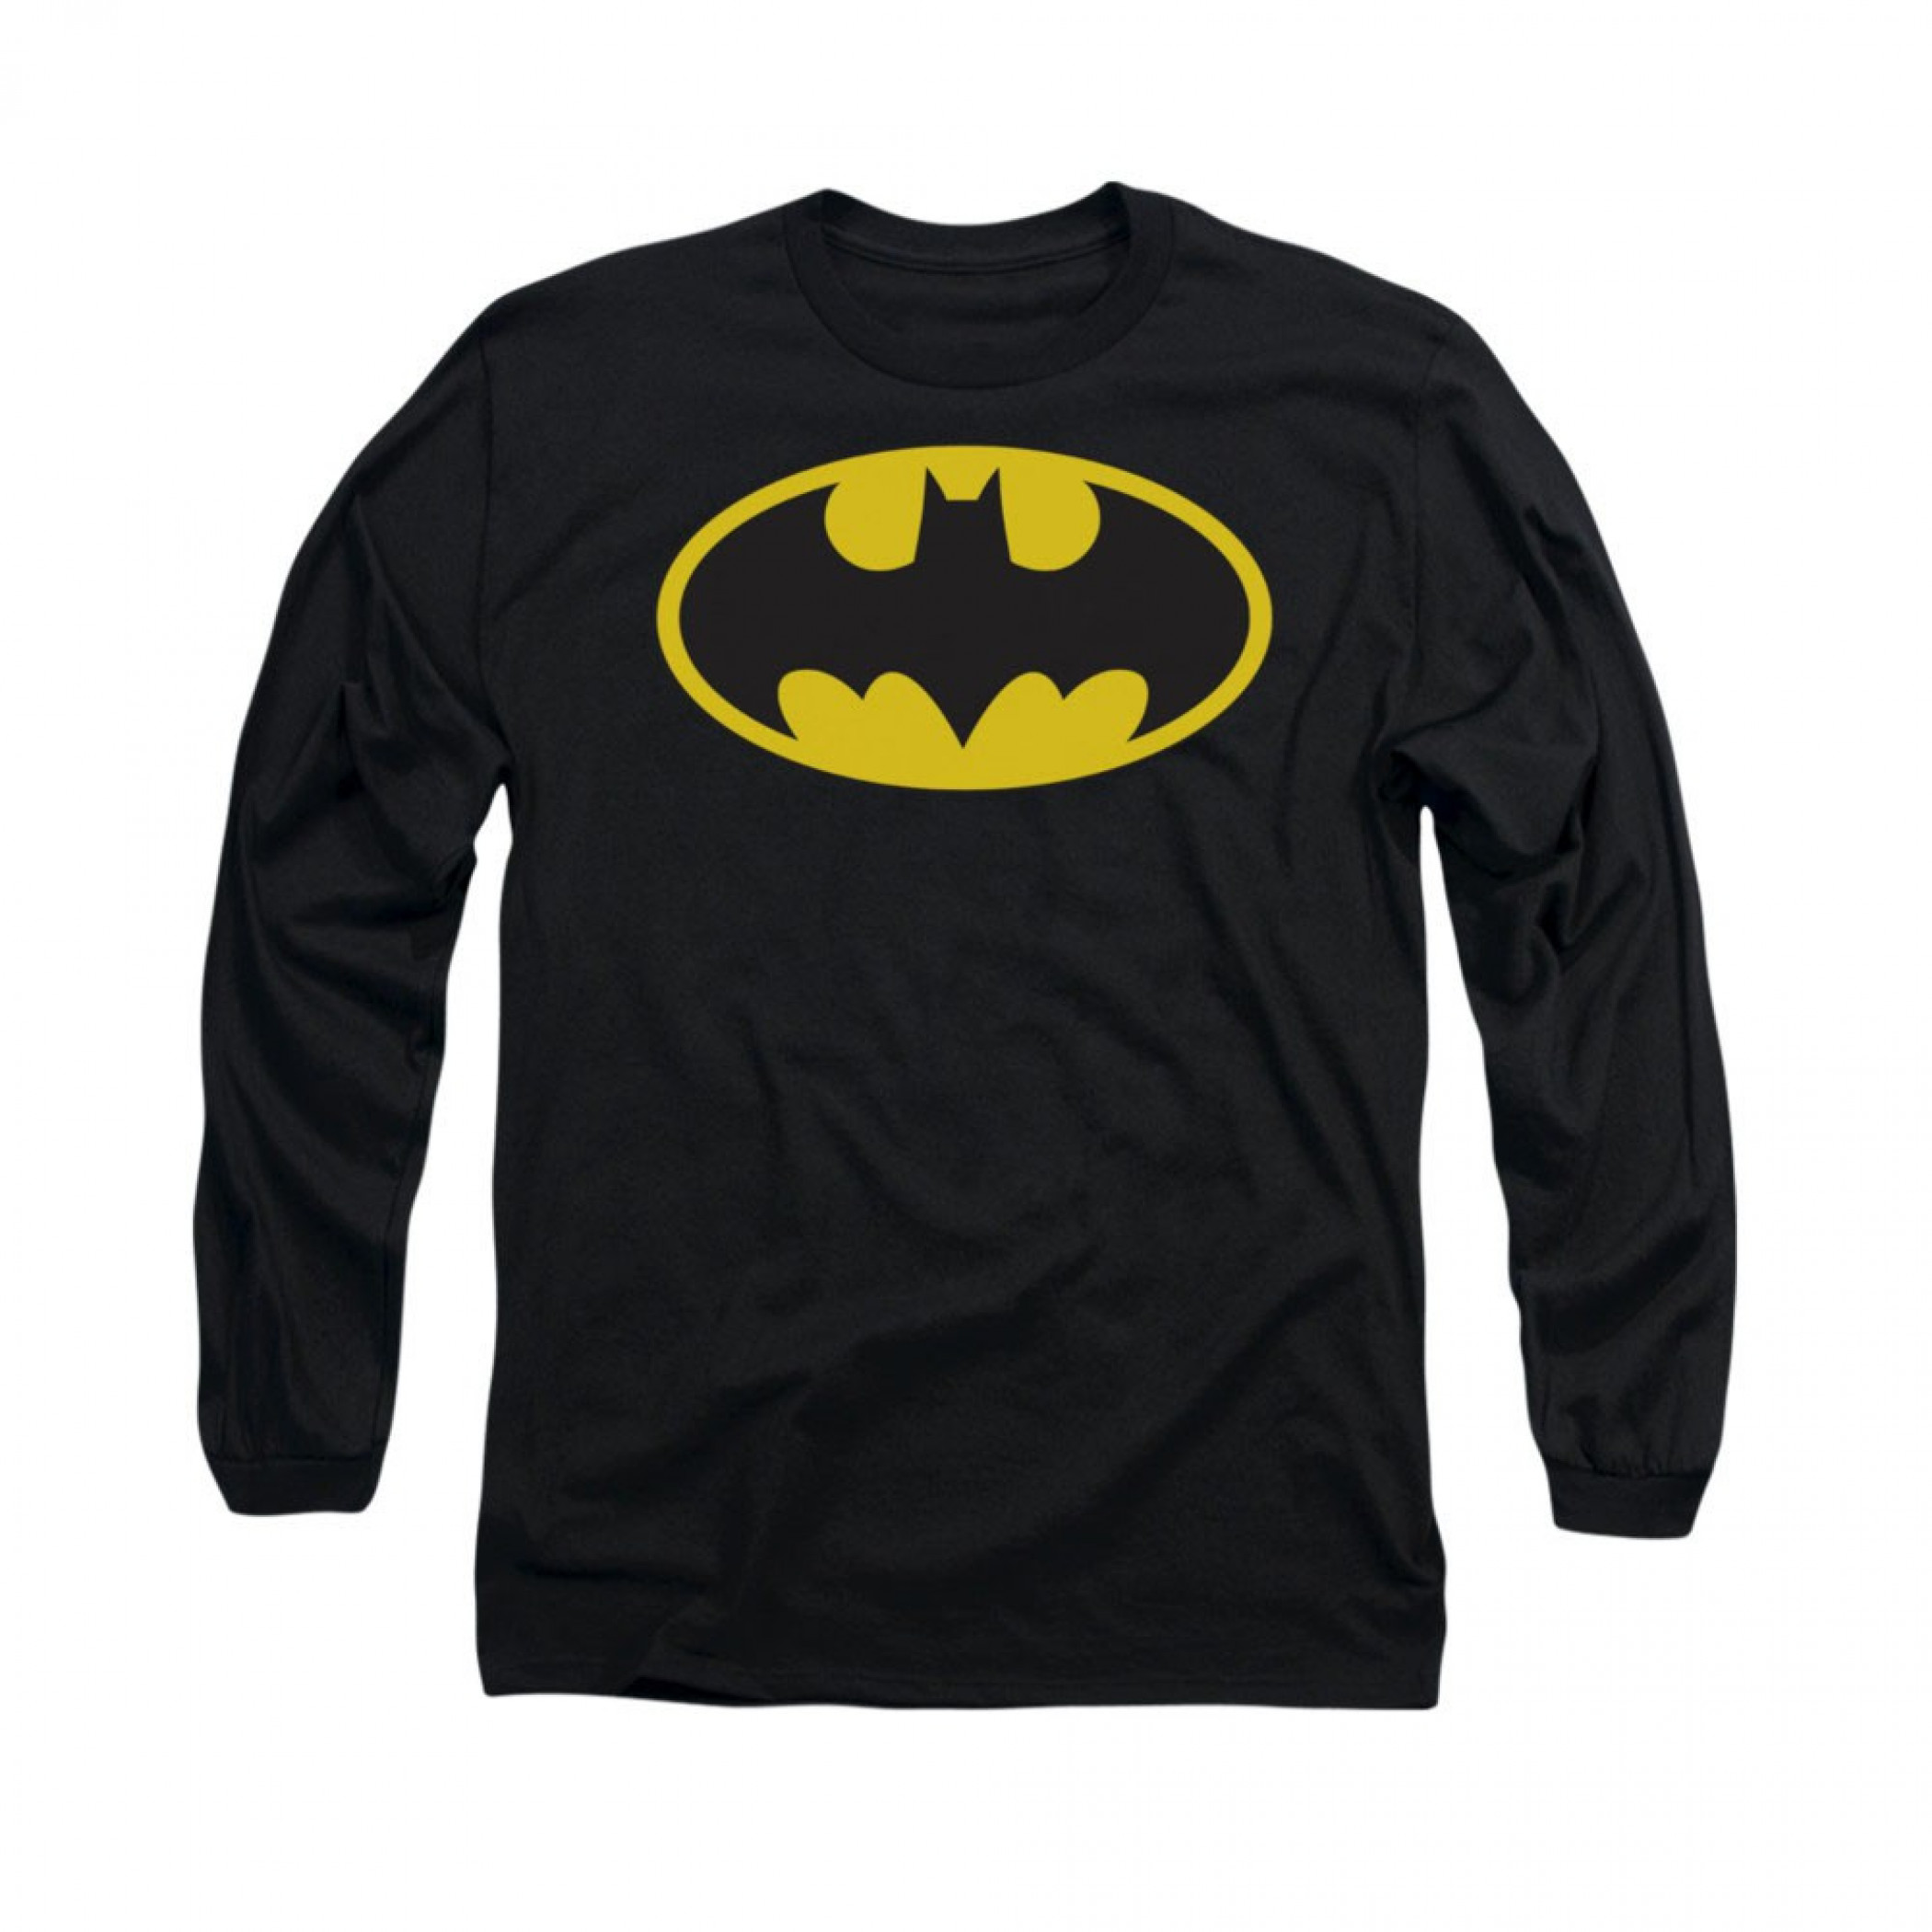 Top Age 4,6,8,10 Boys Character BATMAN Long Sleeve T-shirt Official 